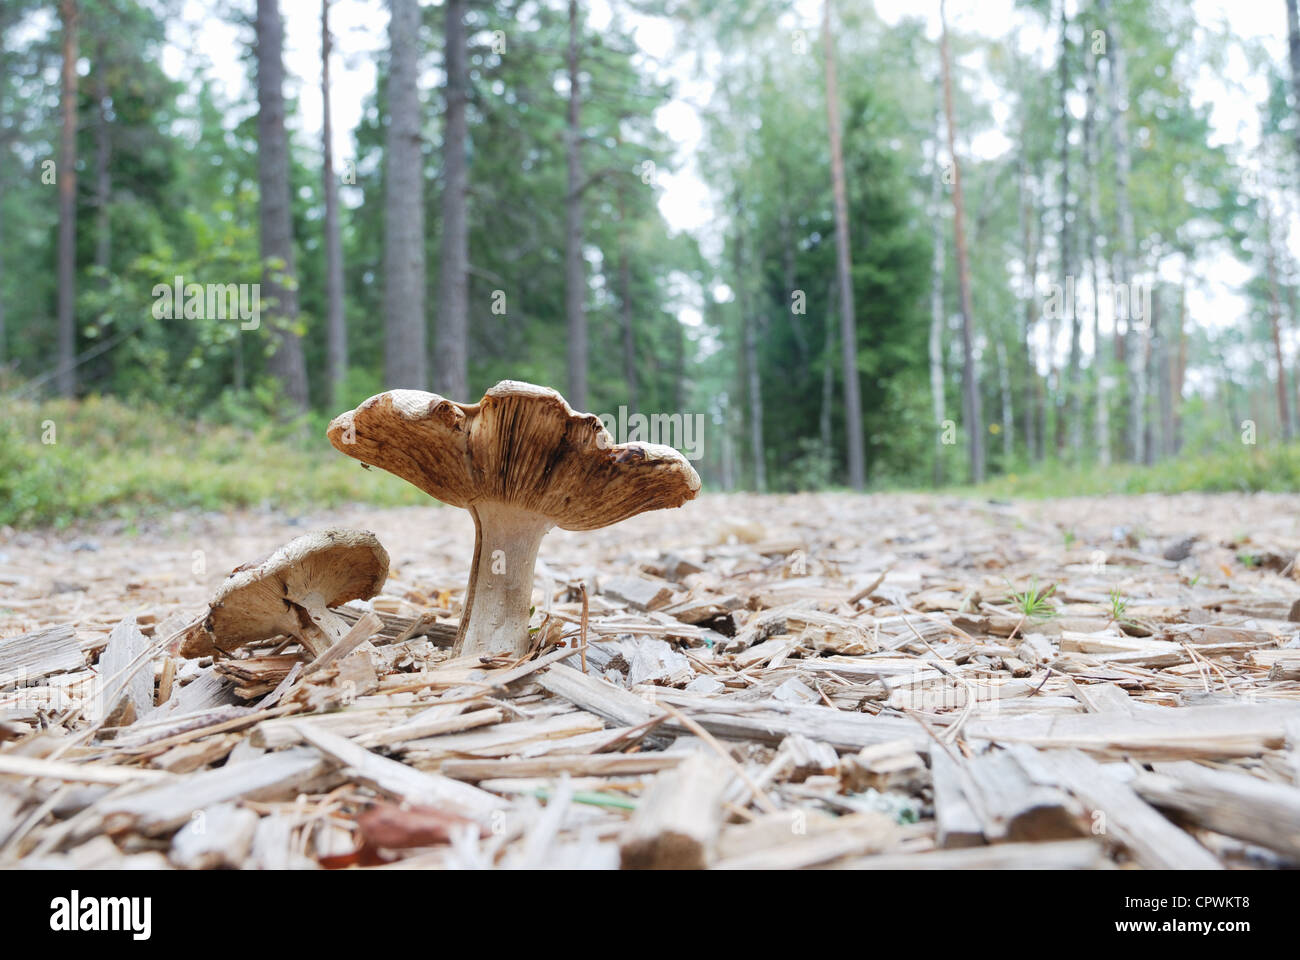 agaric mushrooms in natural enviroment, horizontal photo Stock Photo